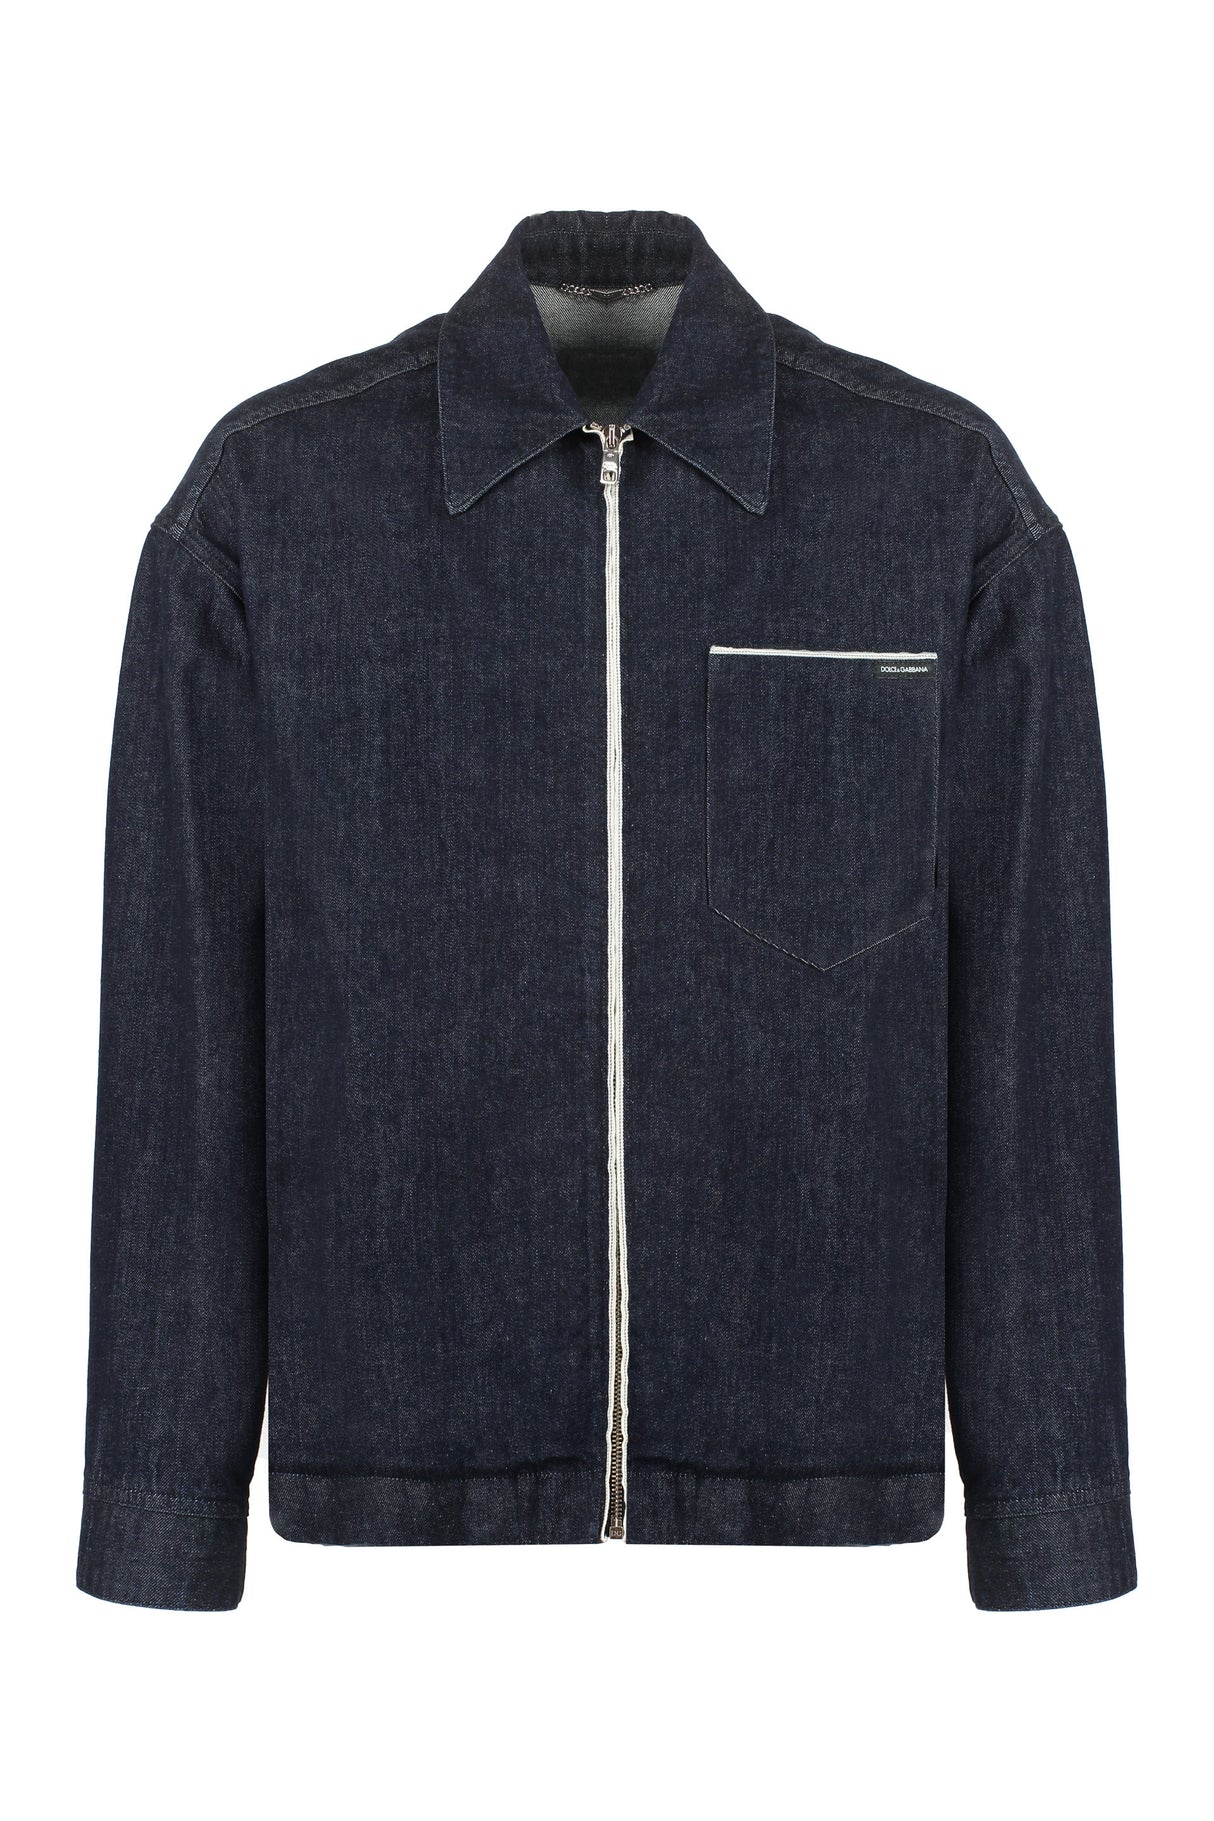 DOLCE & GABBANA Blue Denim Jacket for Men - SS24 Collection